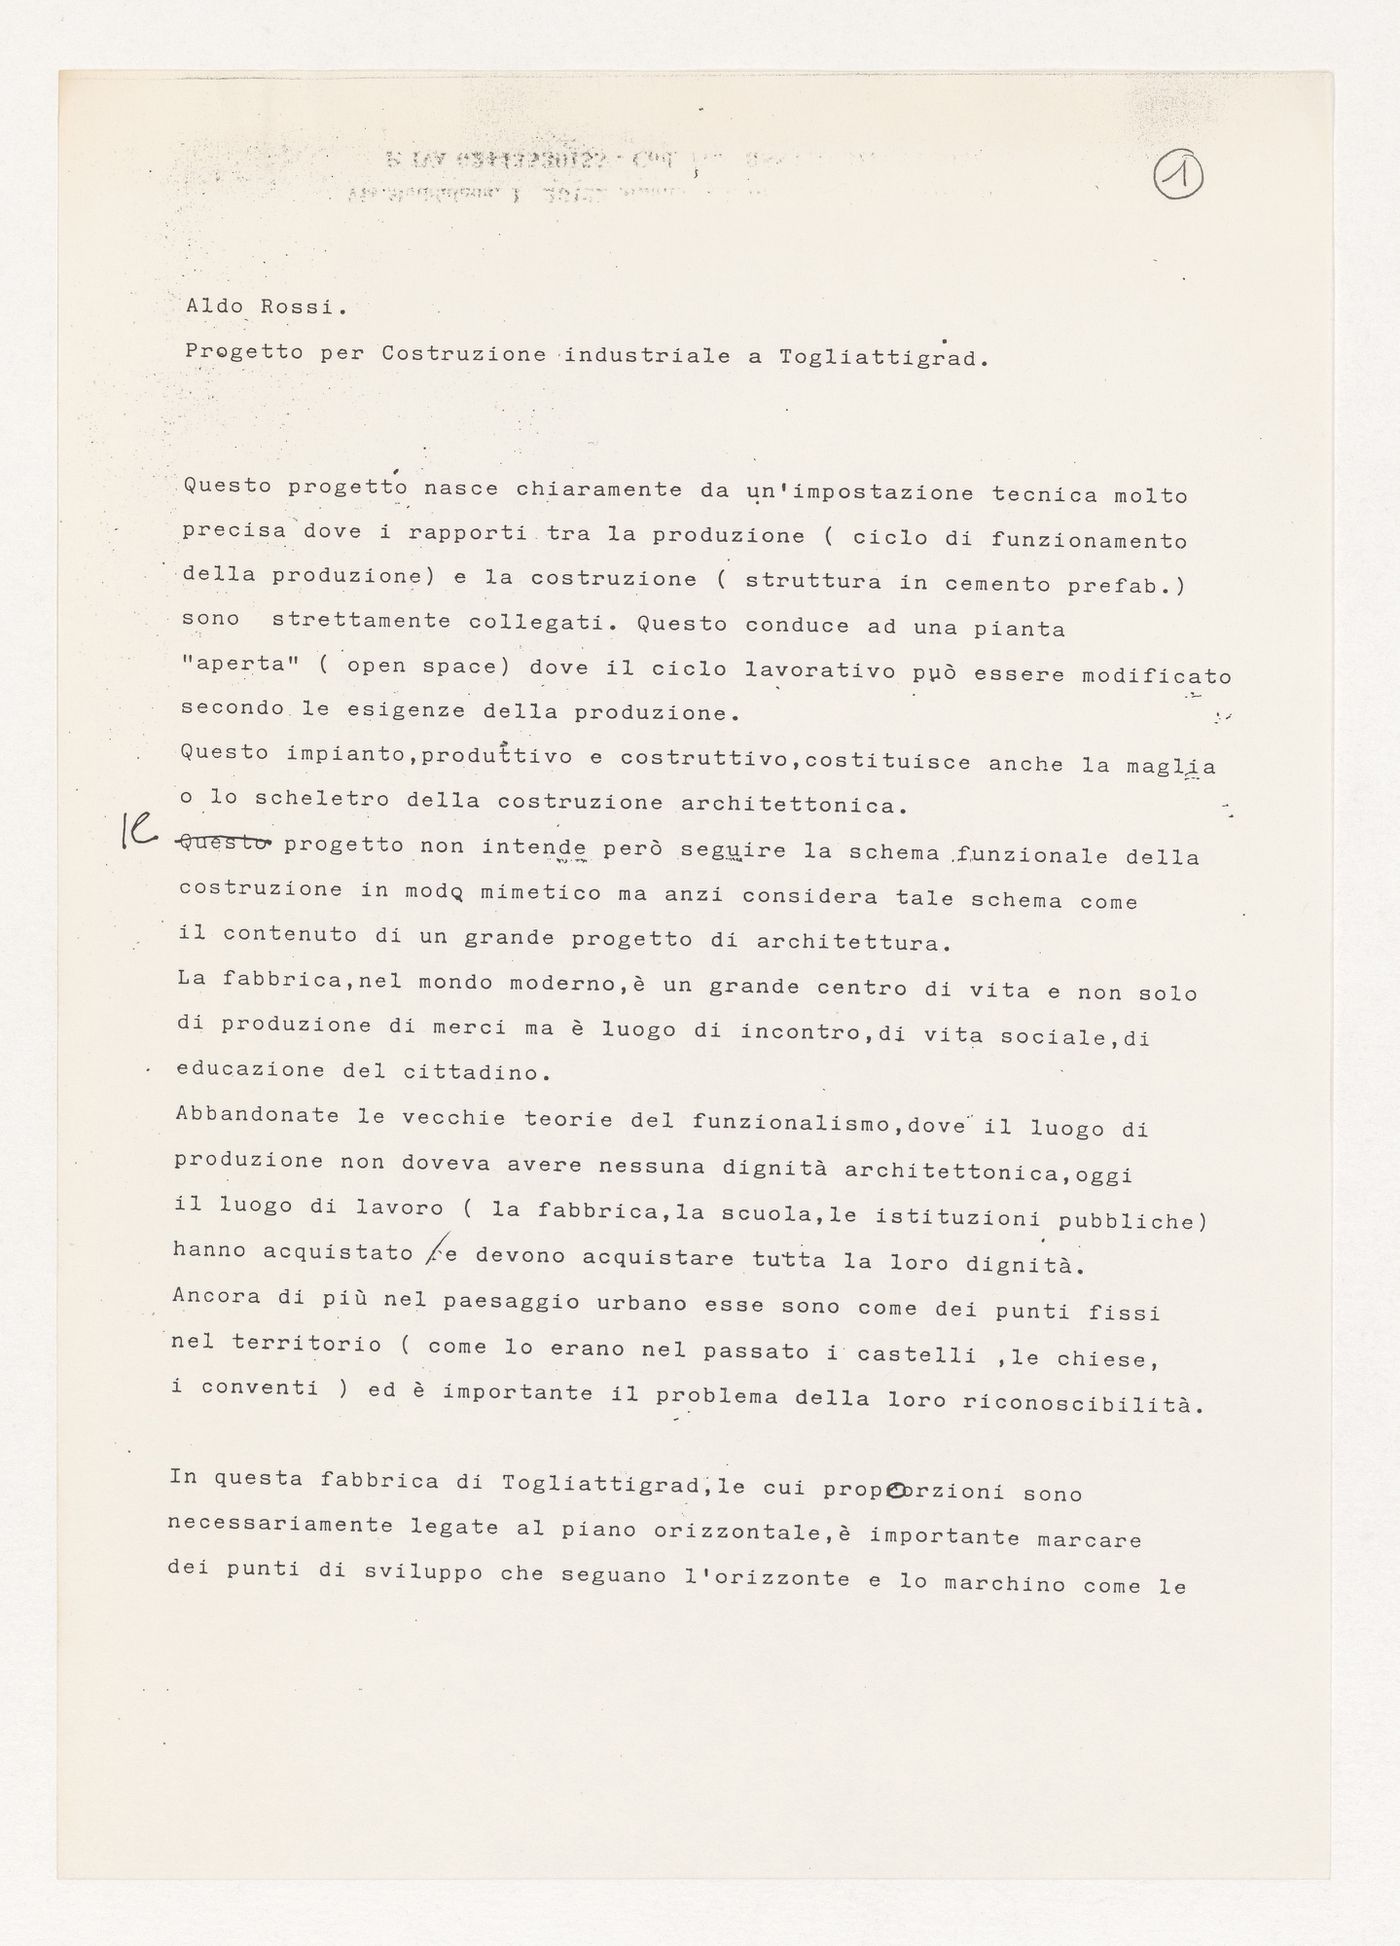 Architect's statement for Fabbrica attrezature ospedaliere a Sysran, Soviet Union (now Russia)